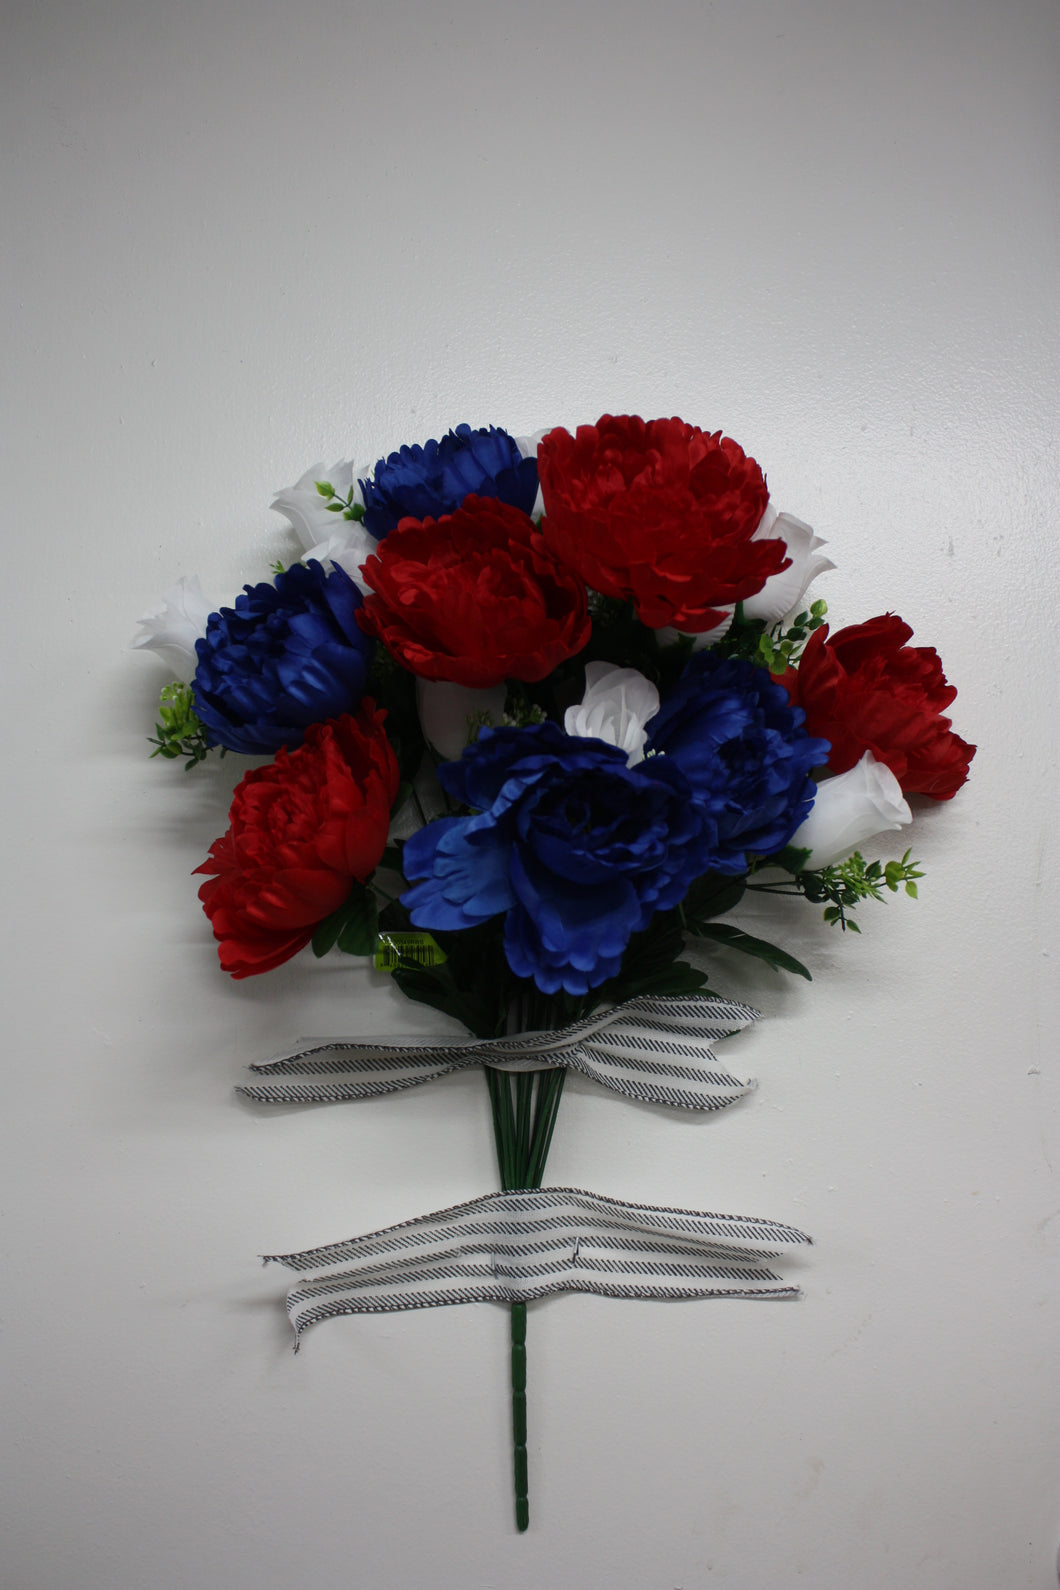 Memorial Cemetery Flowers Peony Rose Bud  with Gypsum- Red/White/Blue